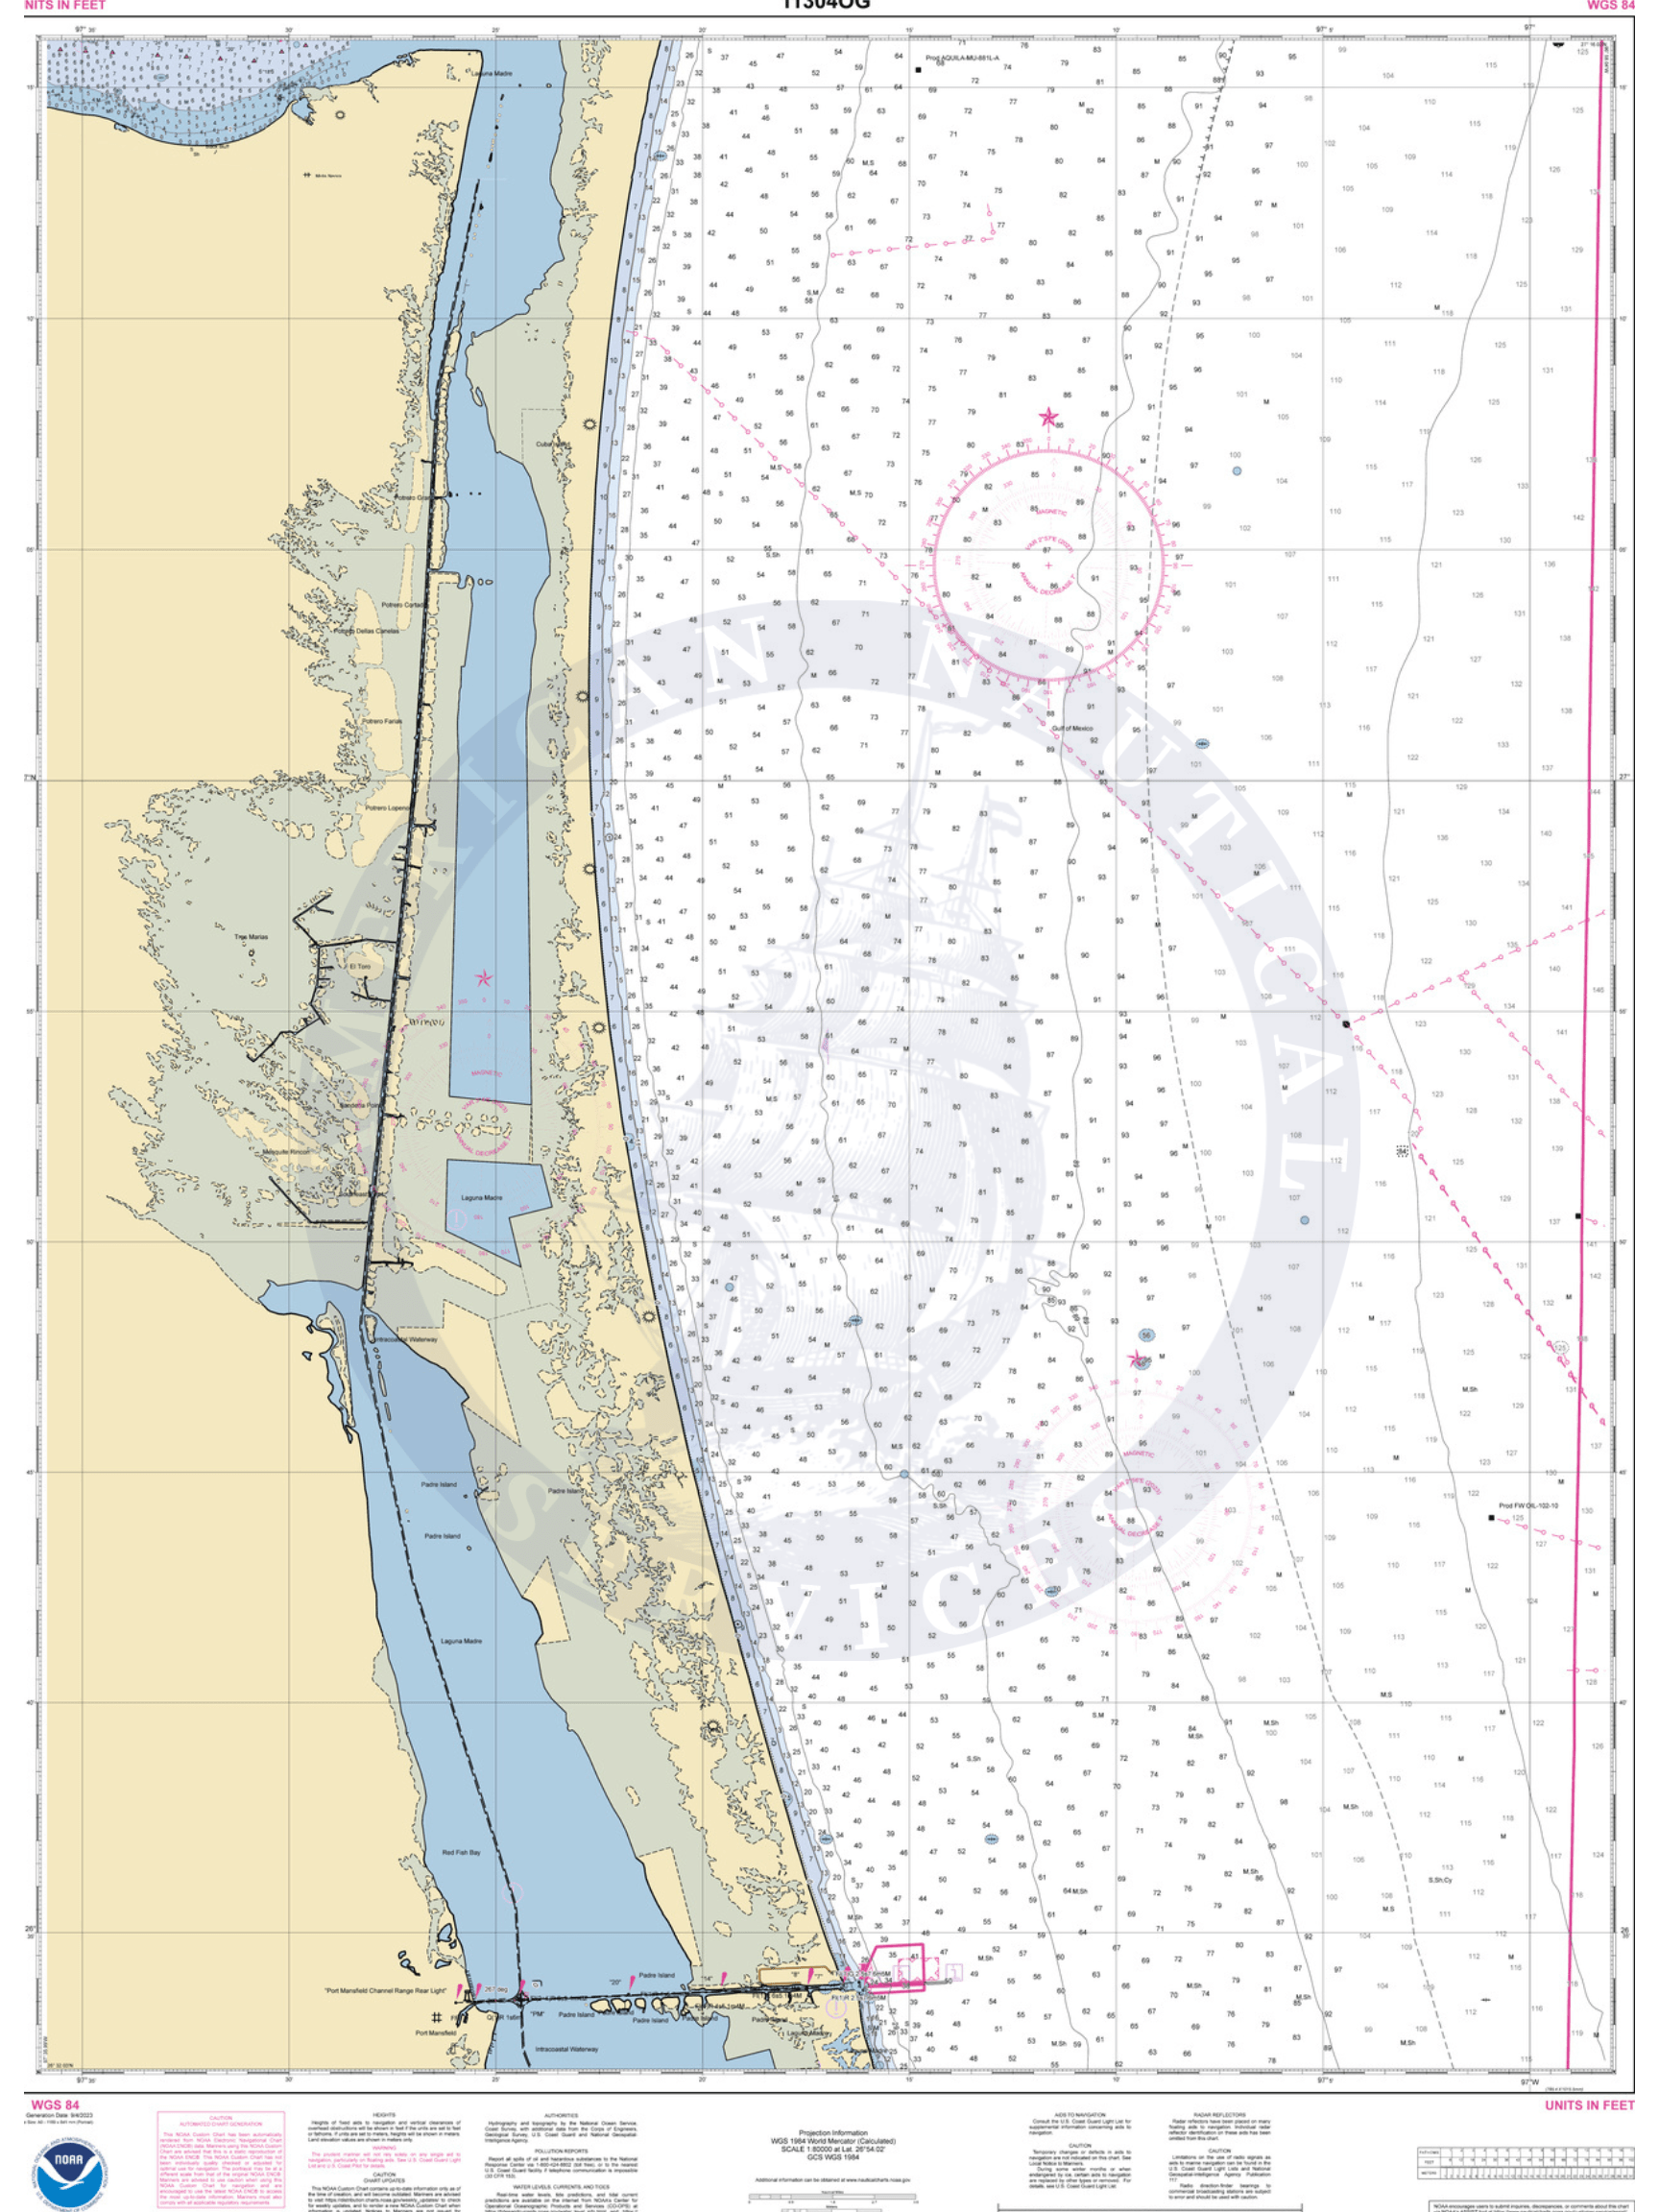 NOAA Nautical Chart 11304: Northern part of Laguna Madre